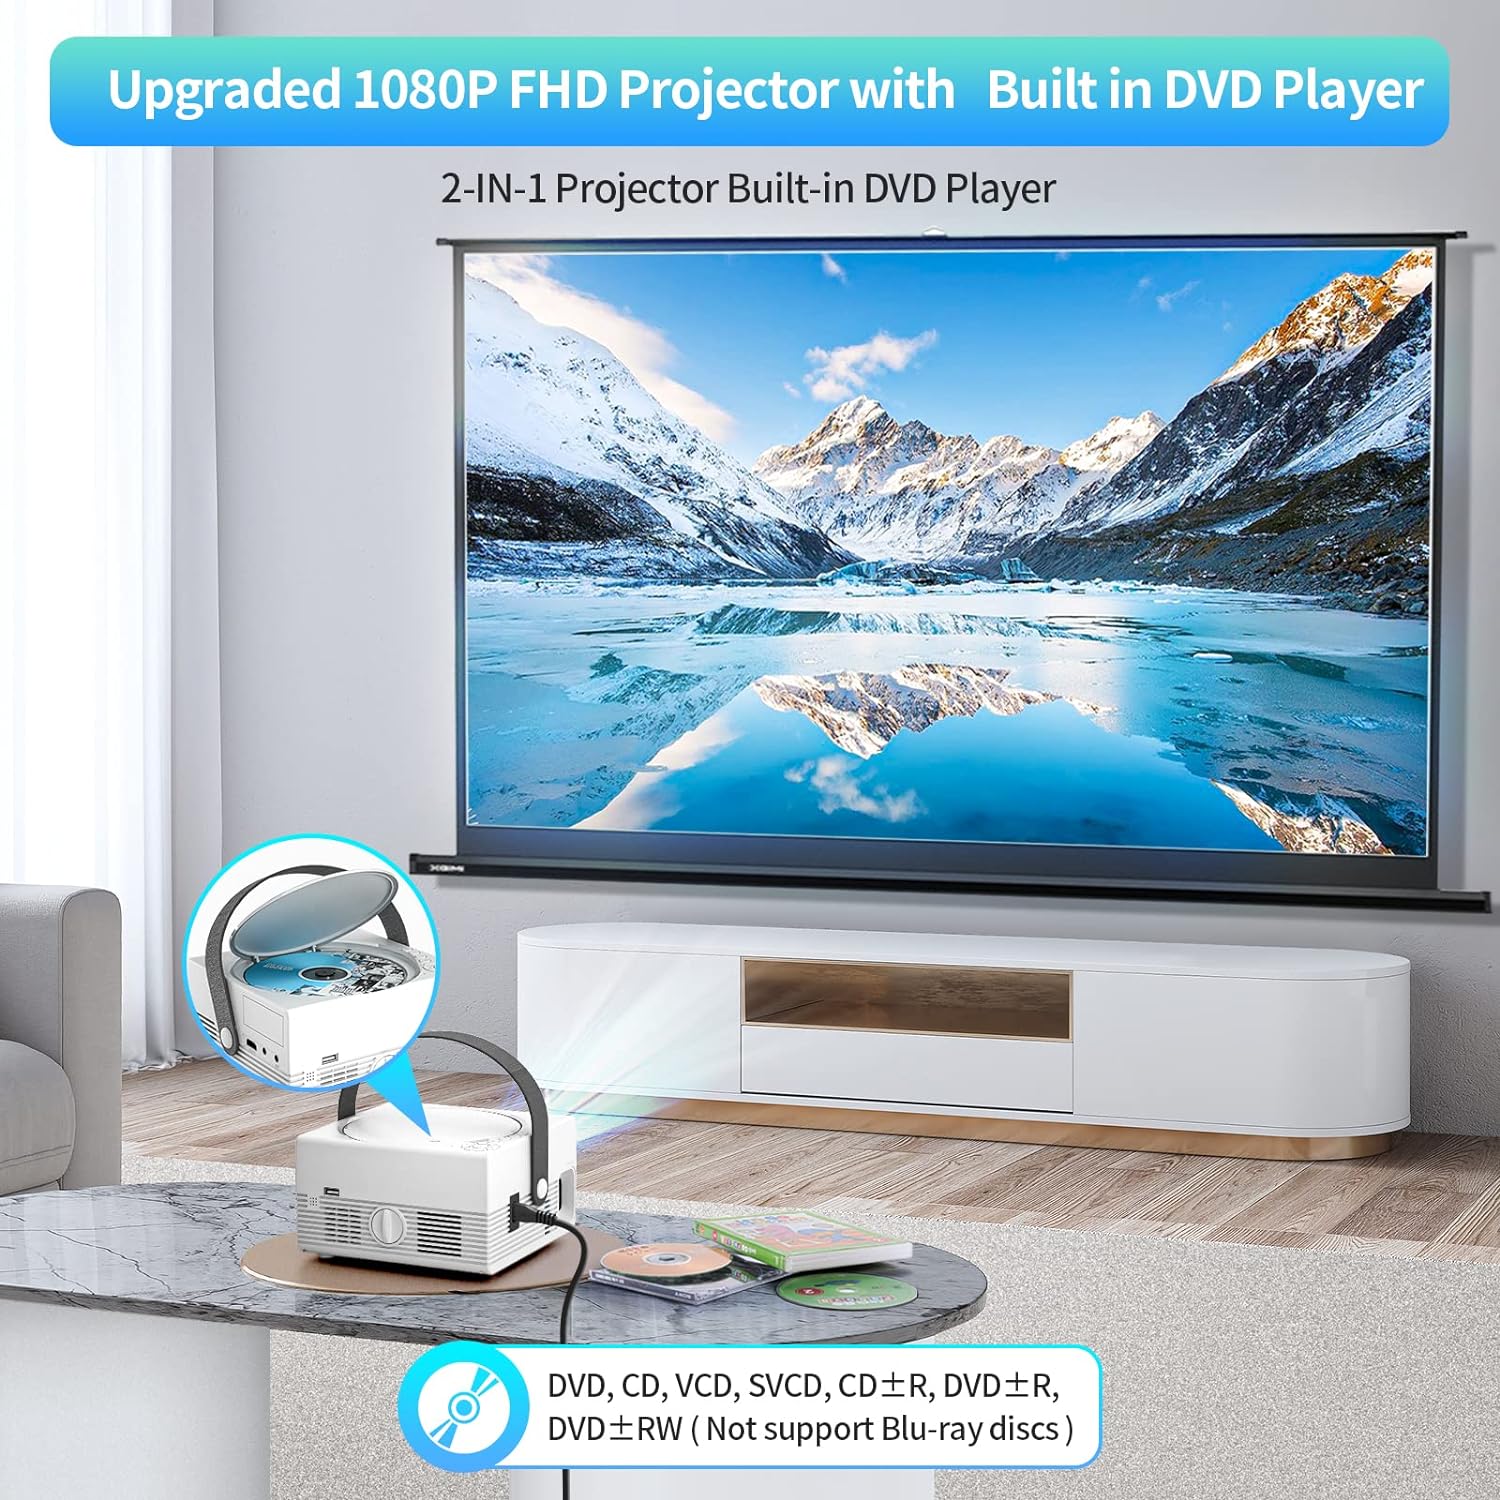 FELEMAN Mini Projector Built in DVD Player - $120